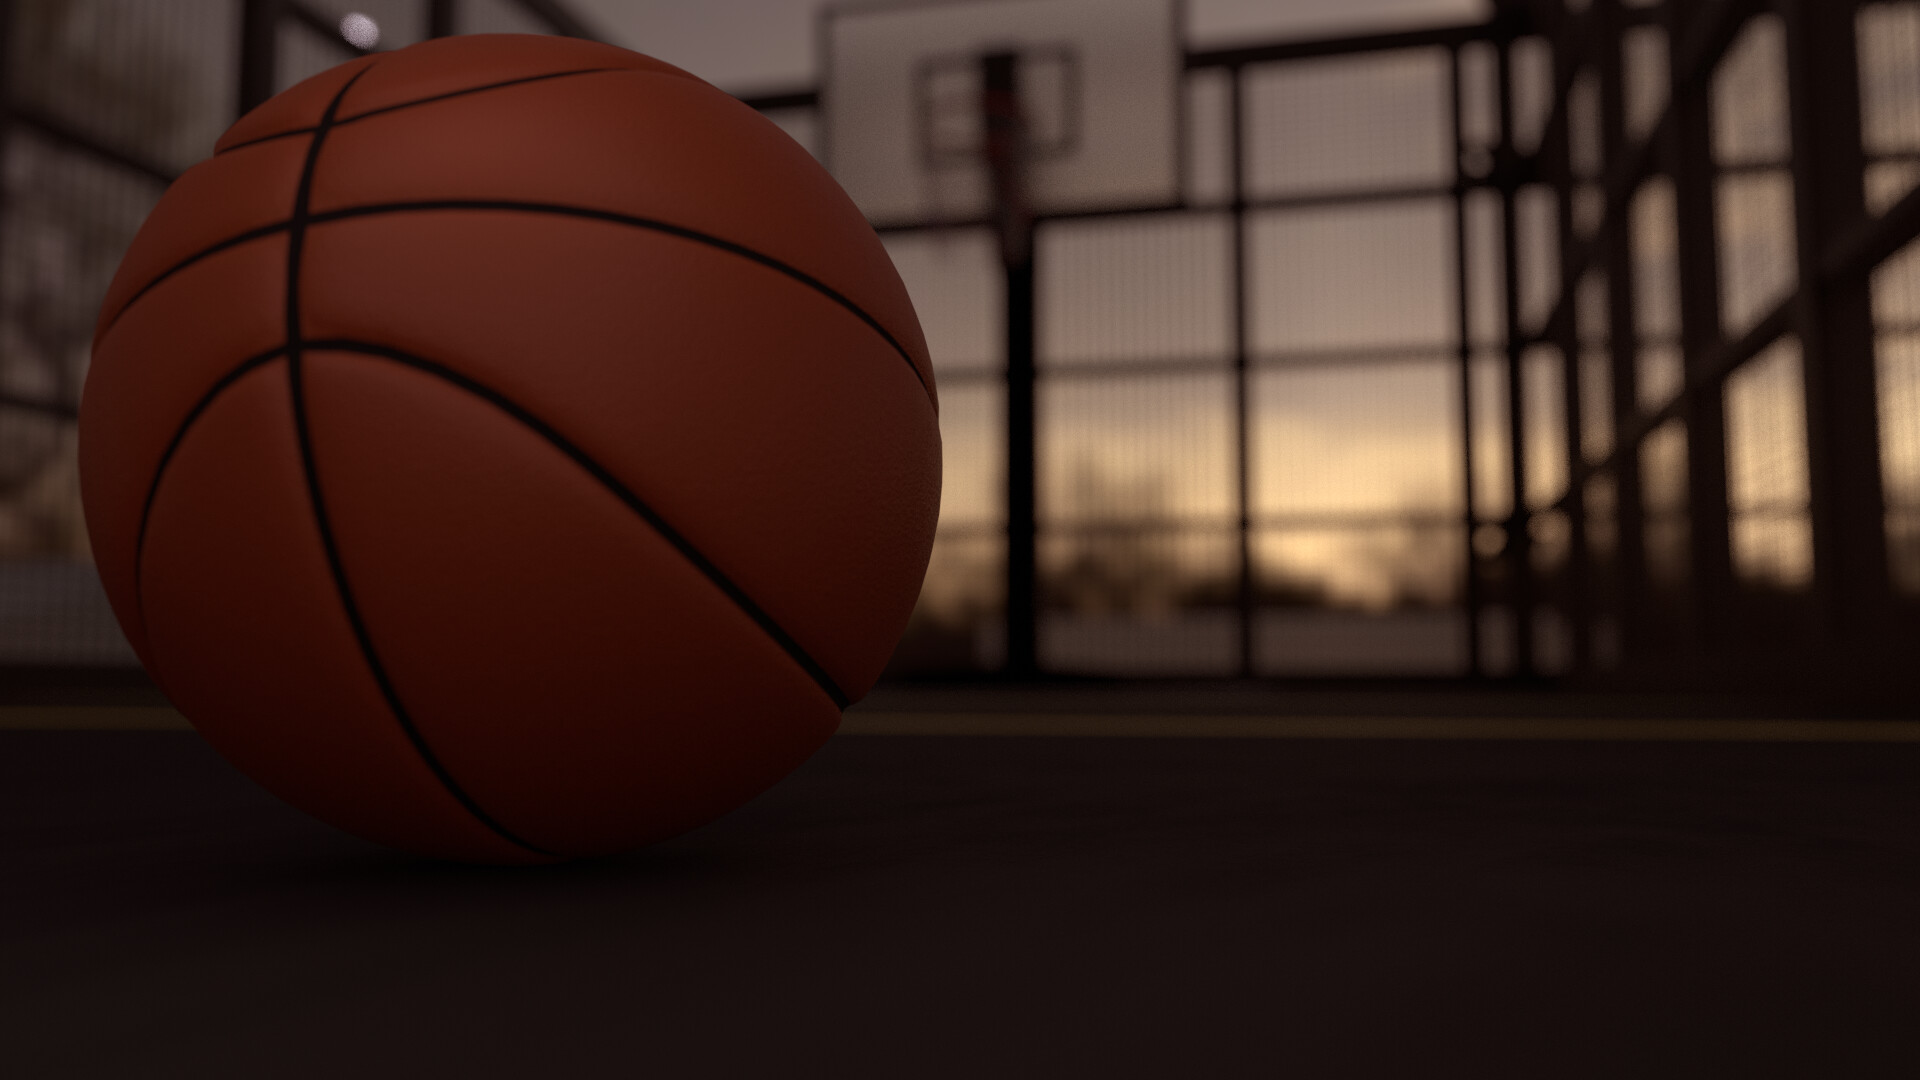 ArtStation - Basketball